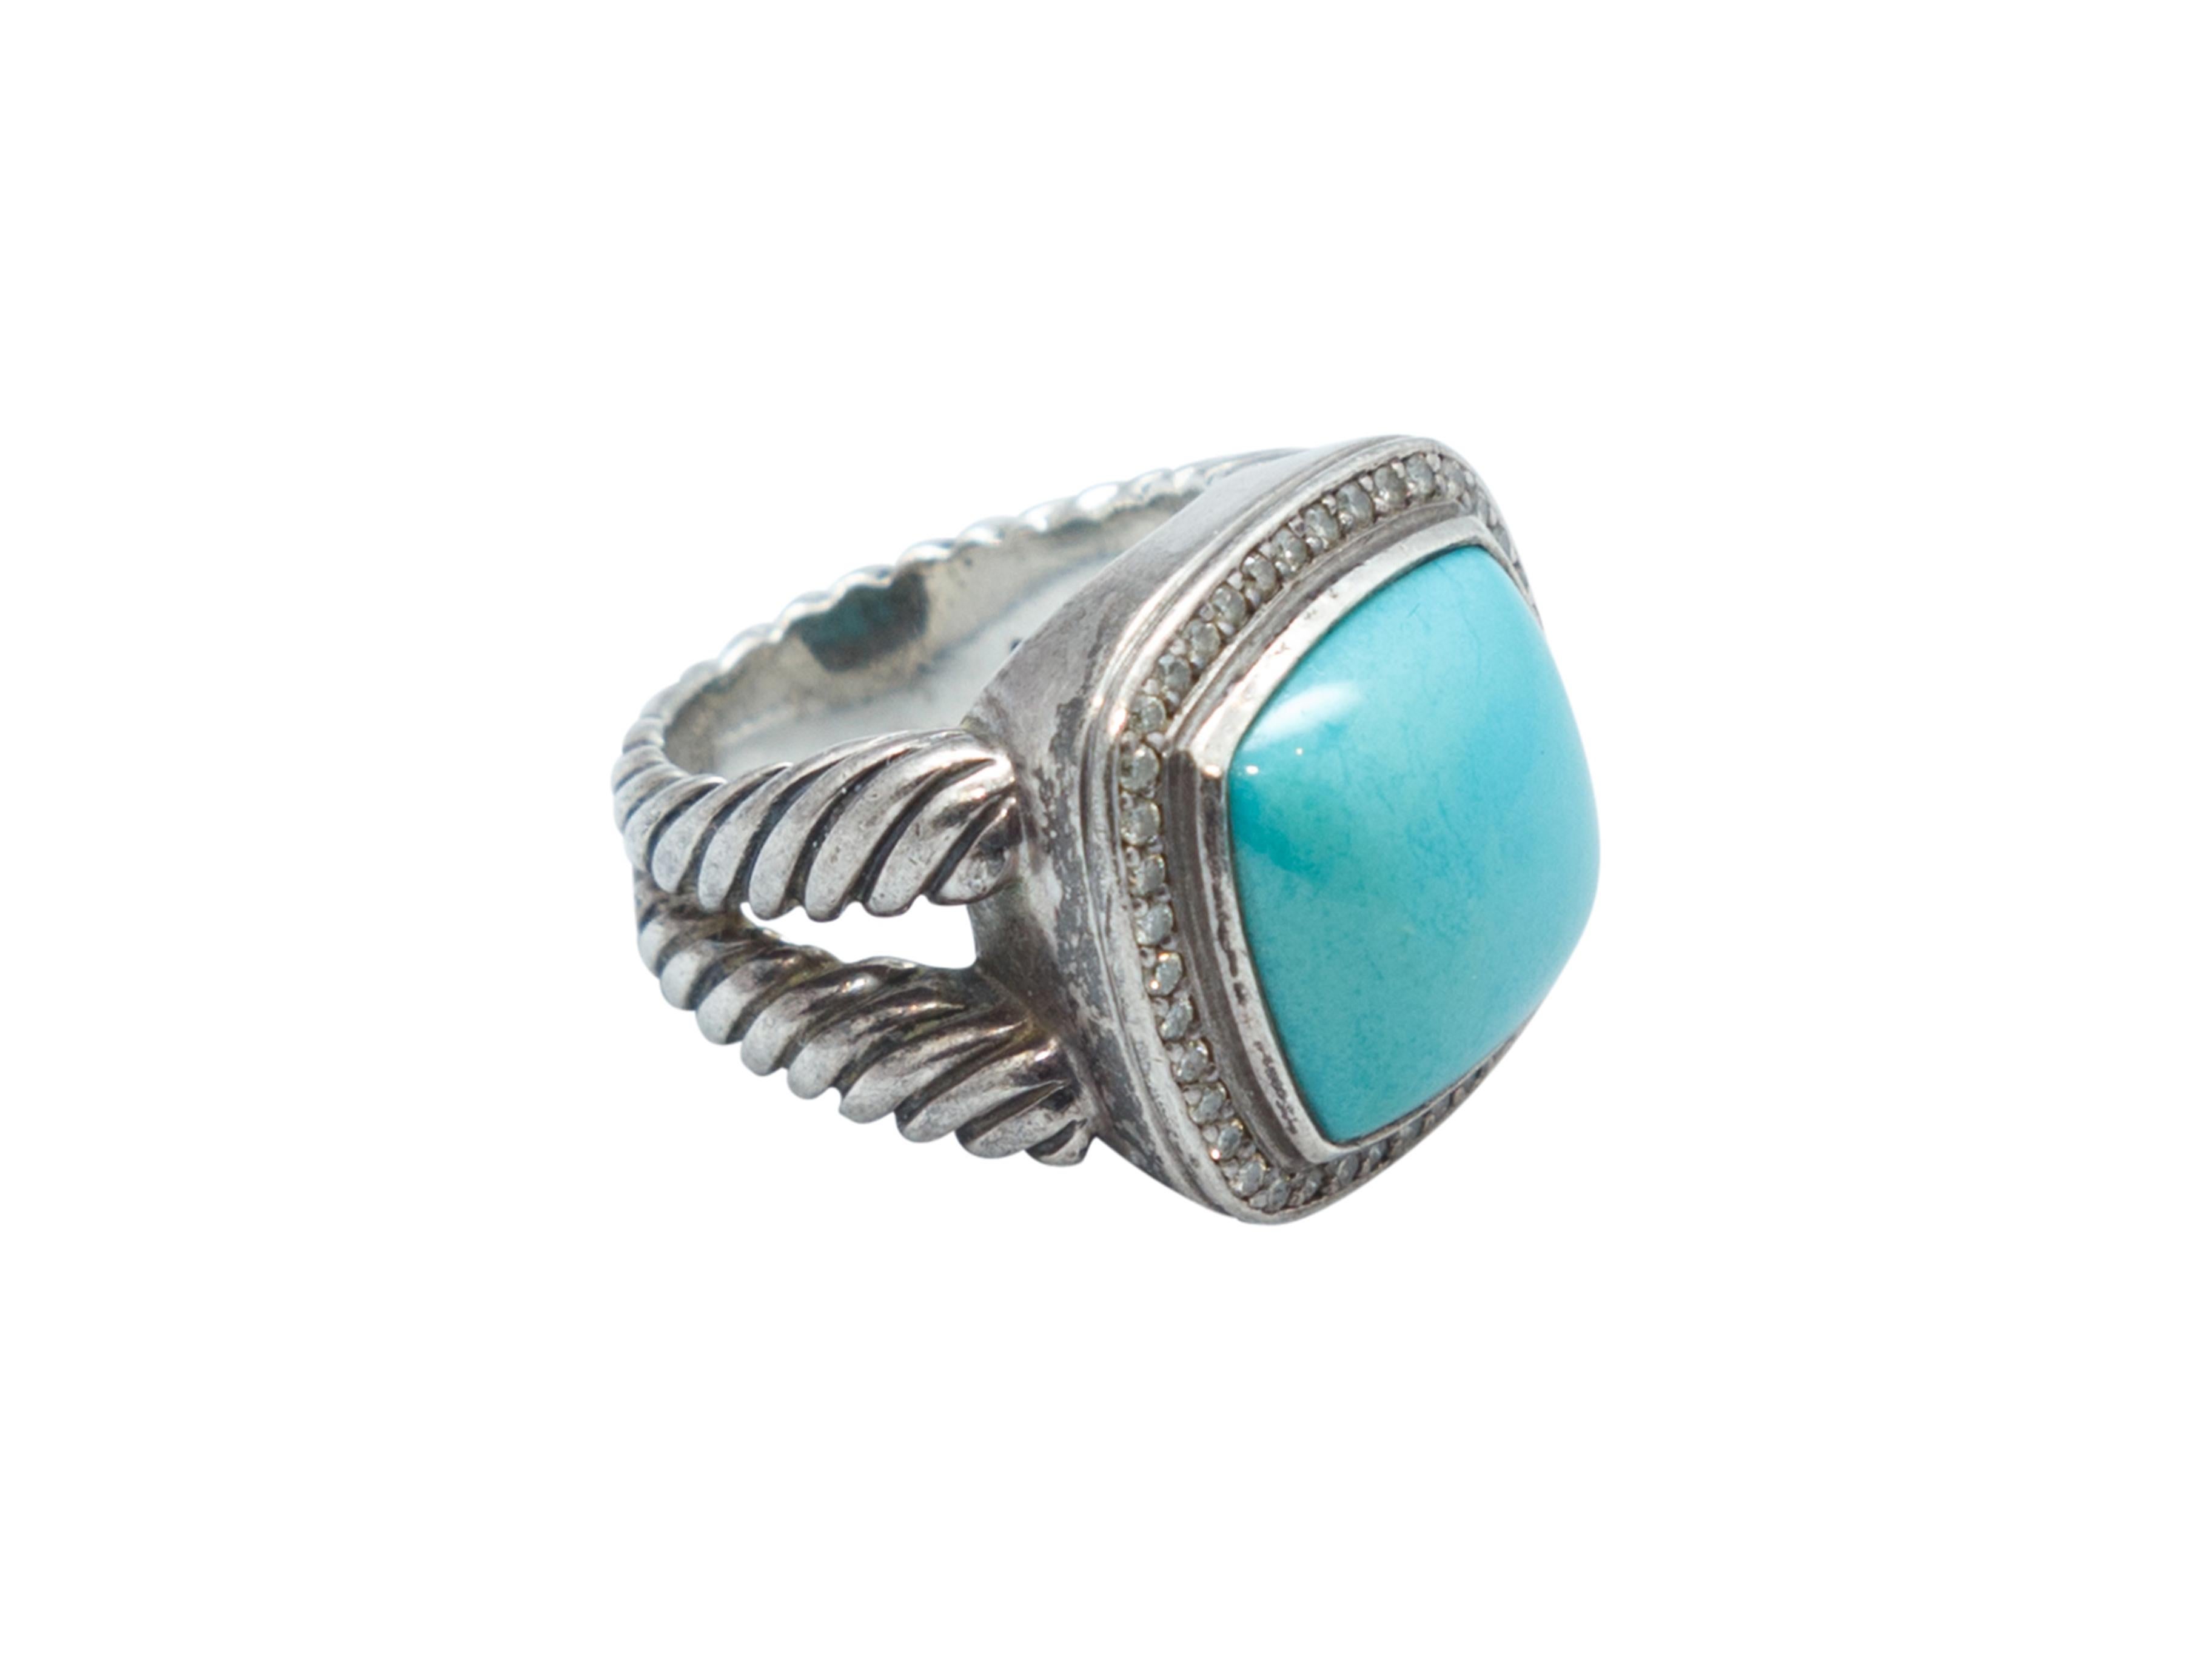 blue topaz and diamond ring